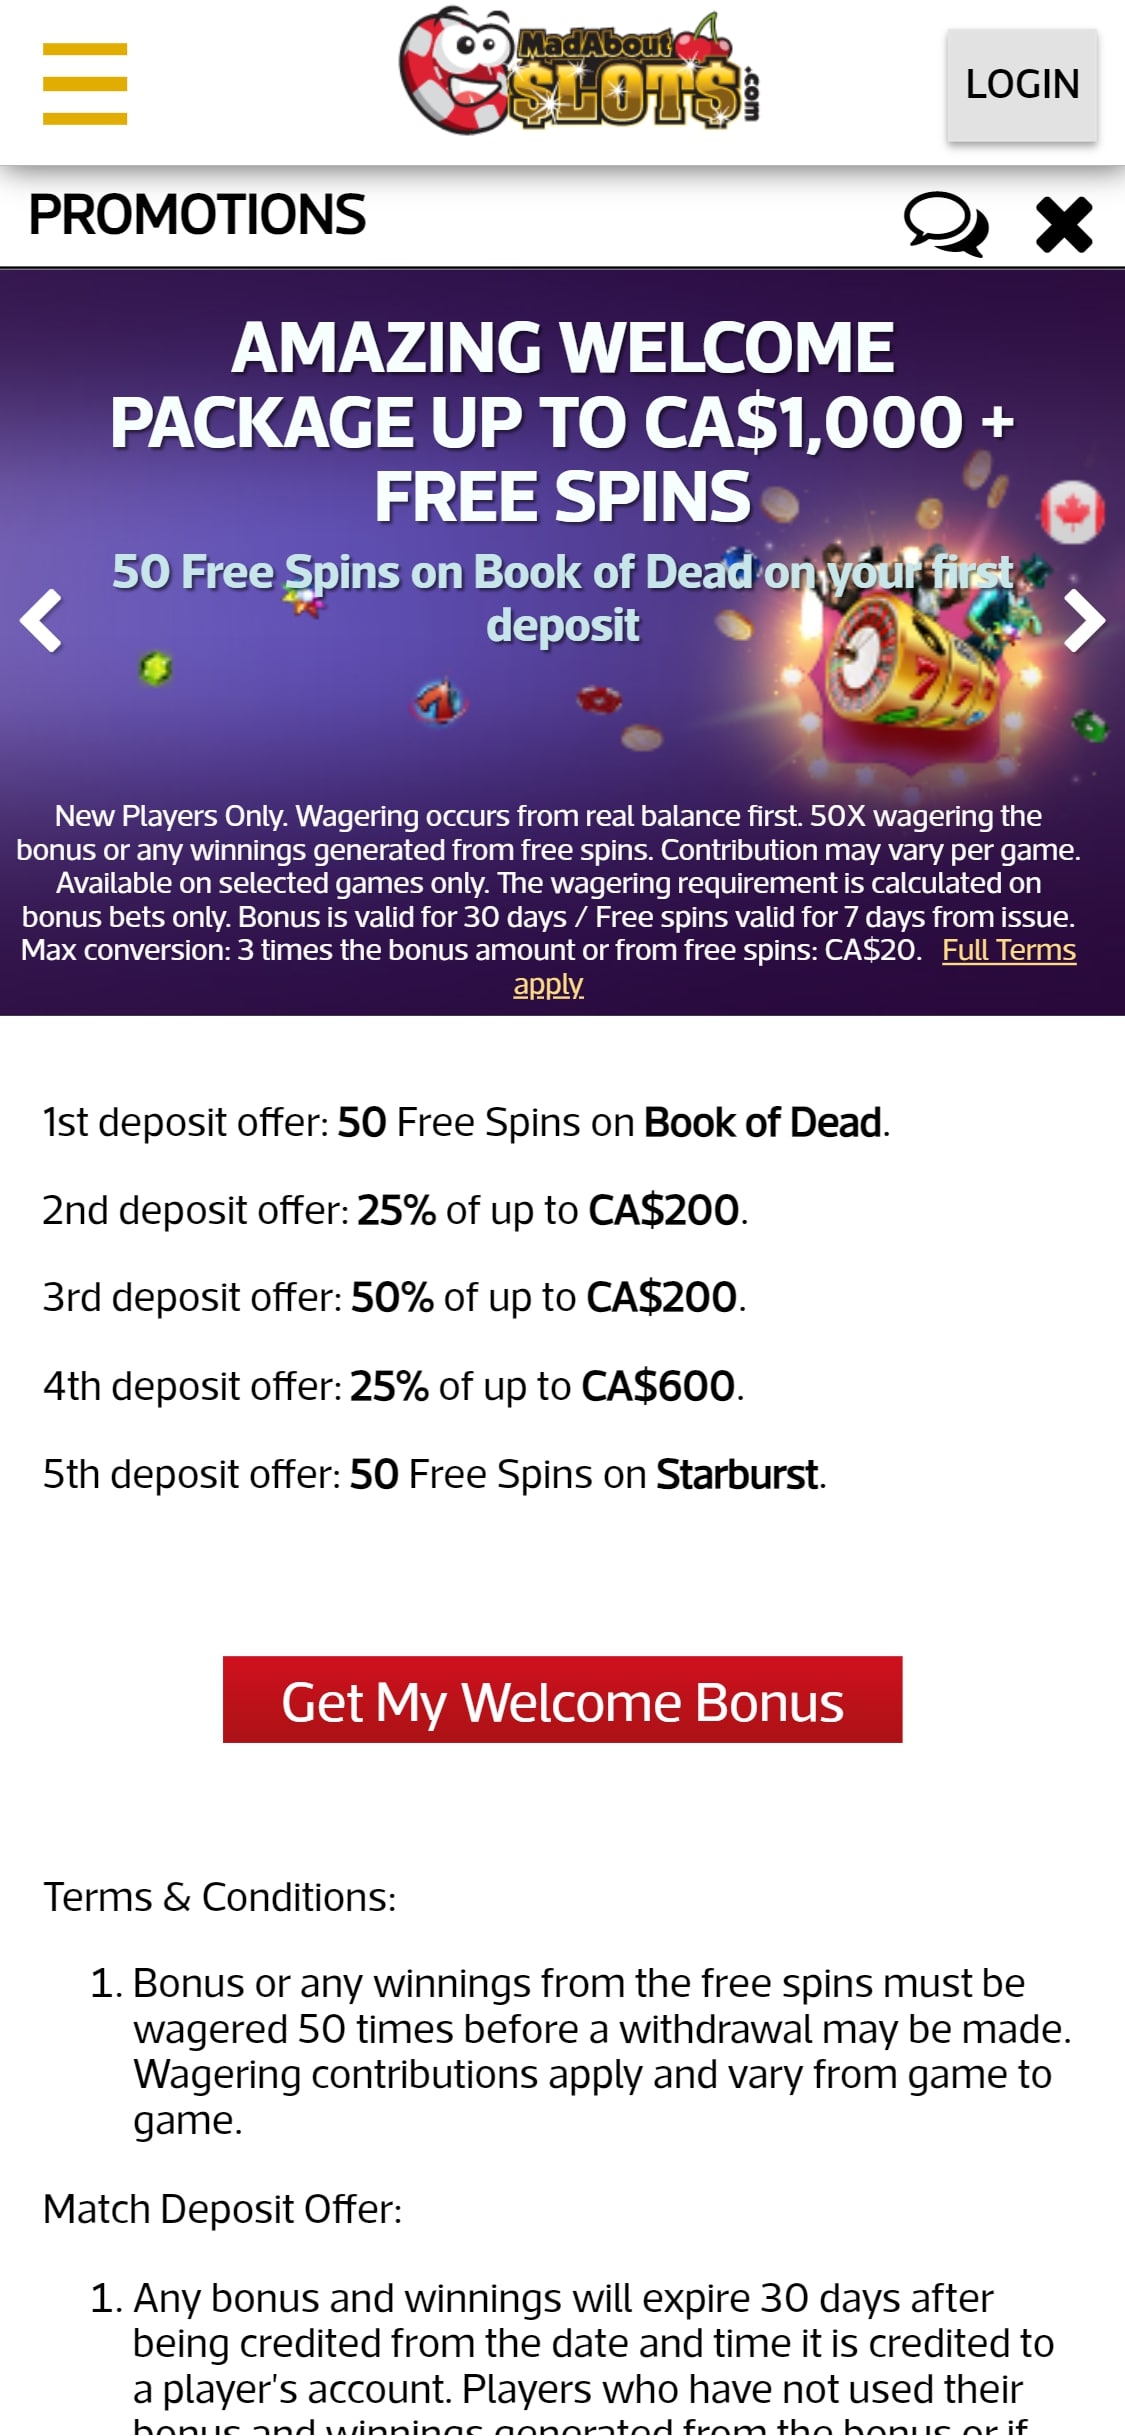 Mad About Slots Casino Mobile No Deposit Bonus Review